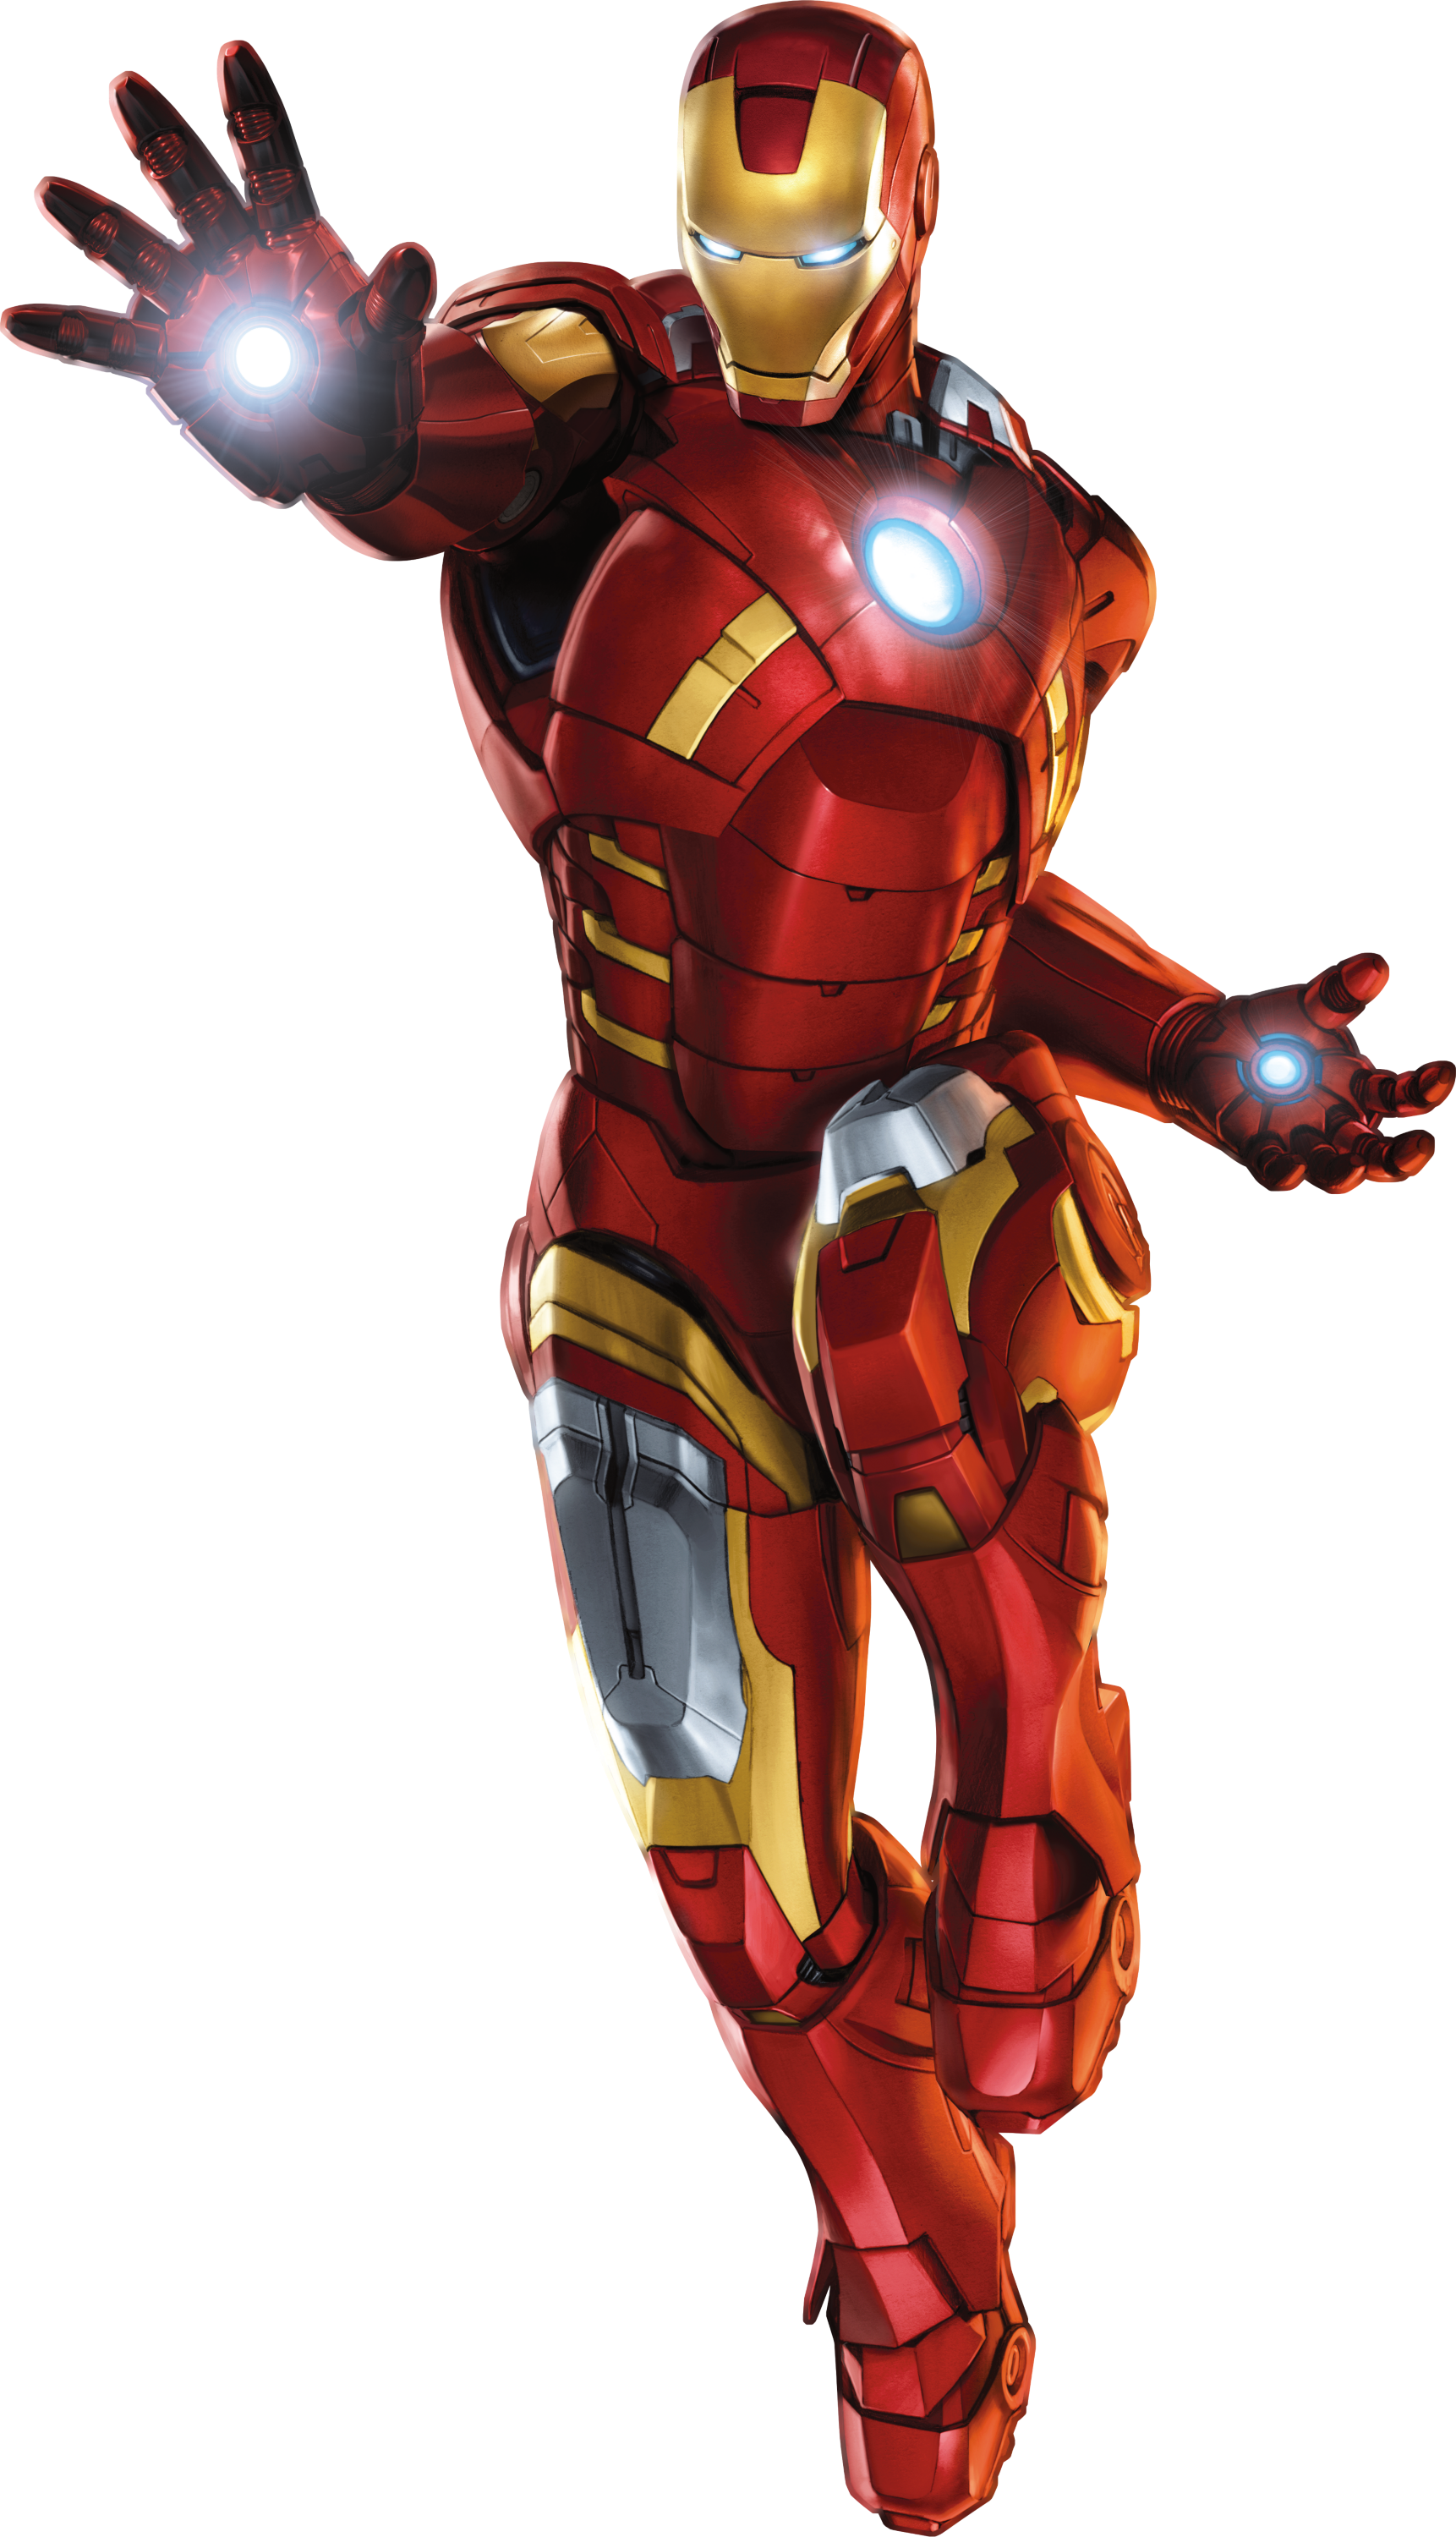 Ironman Avengers PNG Image - PurePNG | Free transparent CC0 PNG Image